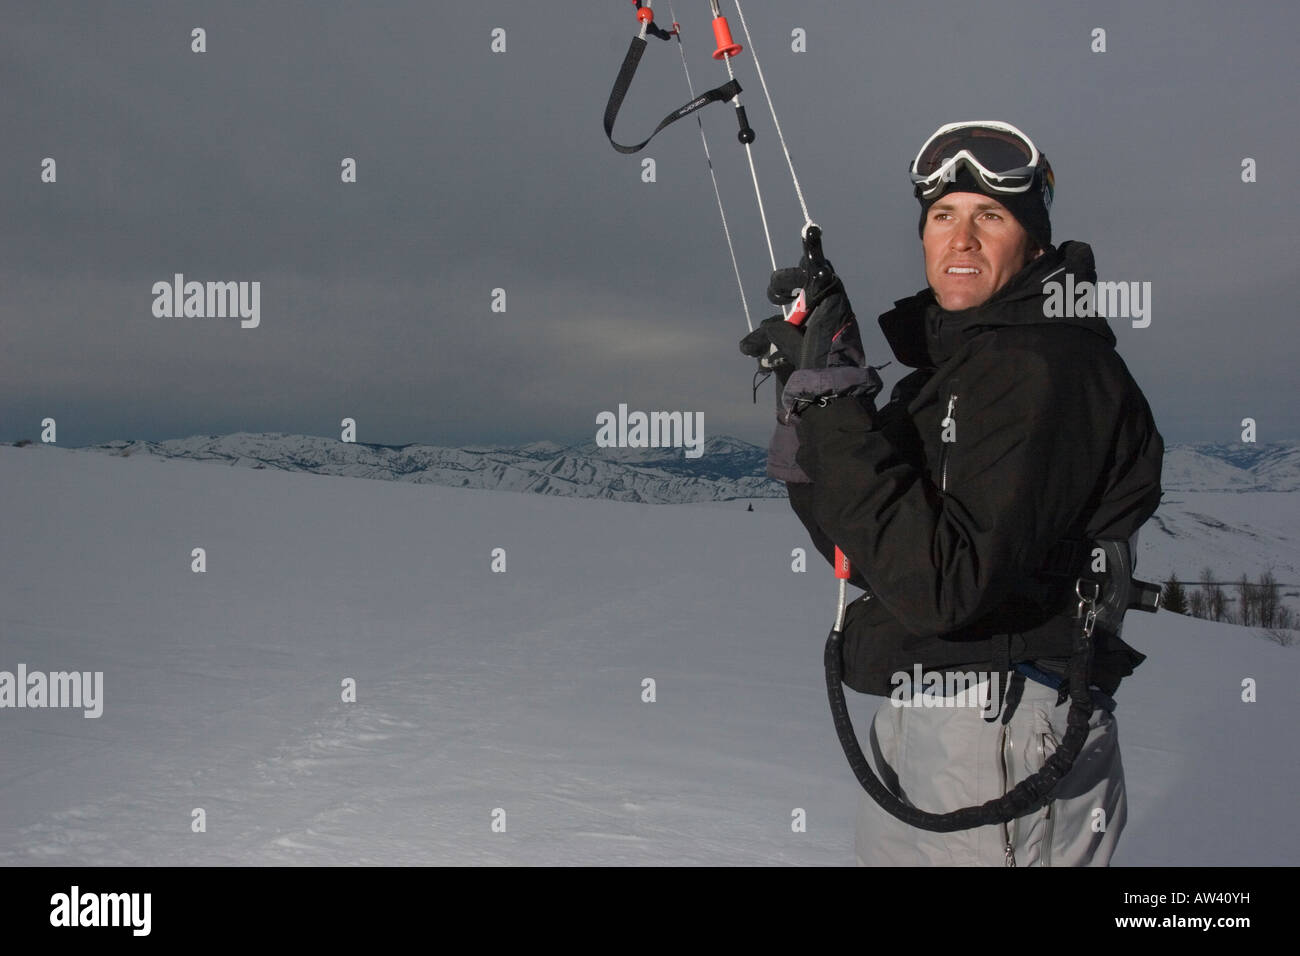 North America Idaho near Camas Prairie snow kite skiing Andrew Monty Goldman Stock Photo